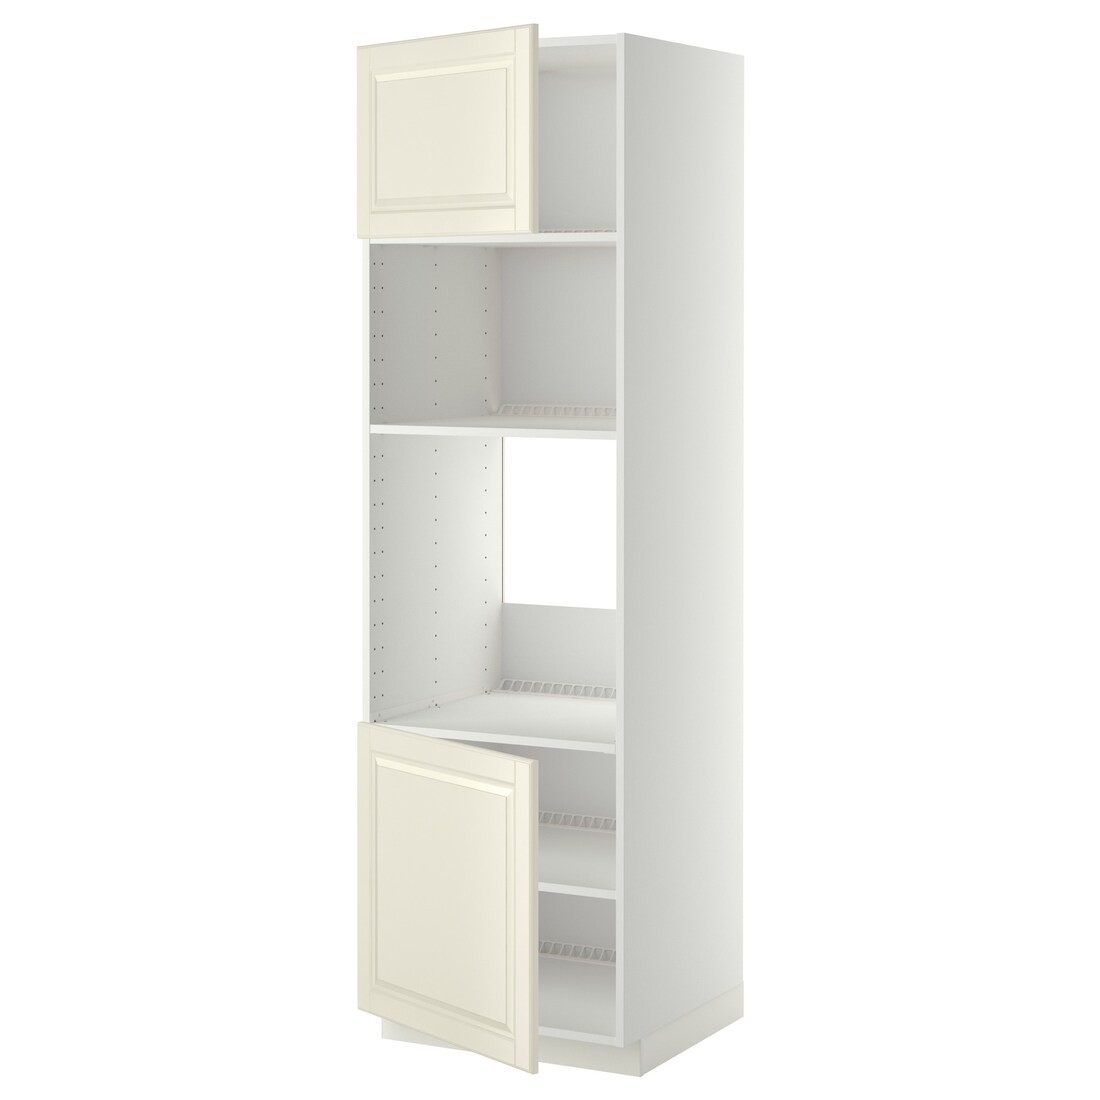 IKEA METOD МЕТОД Высокий шкаф для духовки / СВЧ, белый / Bodbyn кремовый, 60x60x200 см 39461905 | 394.619.05